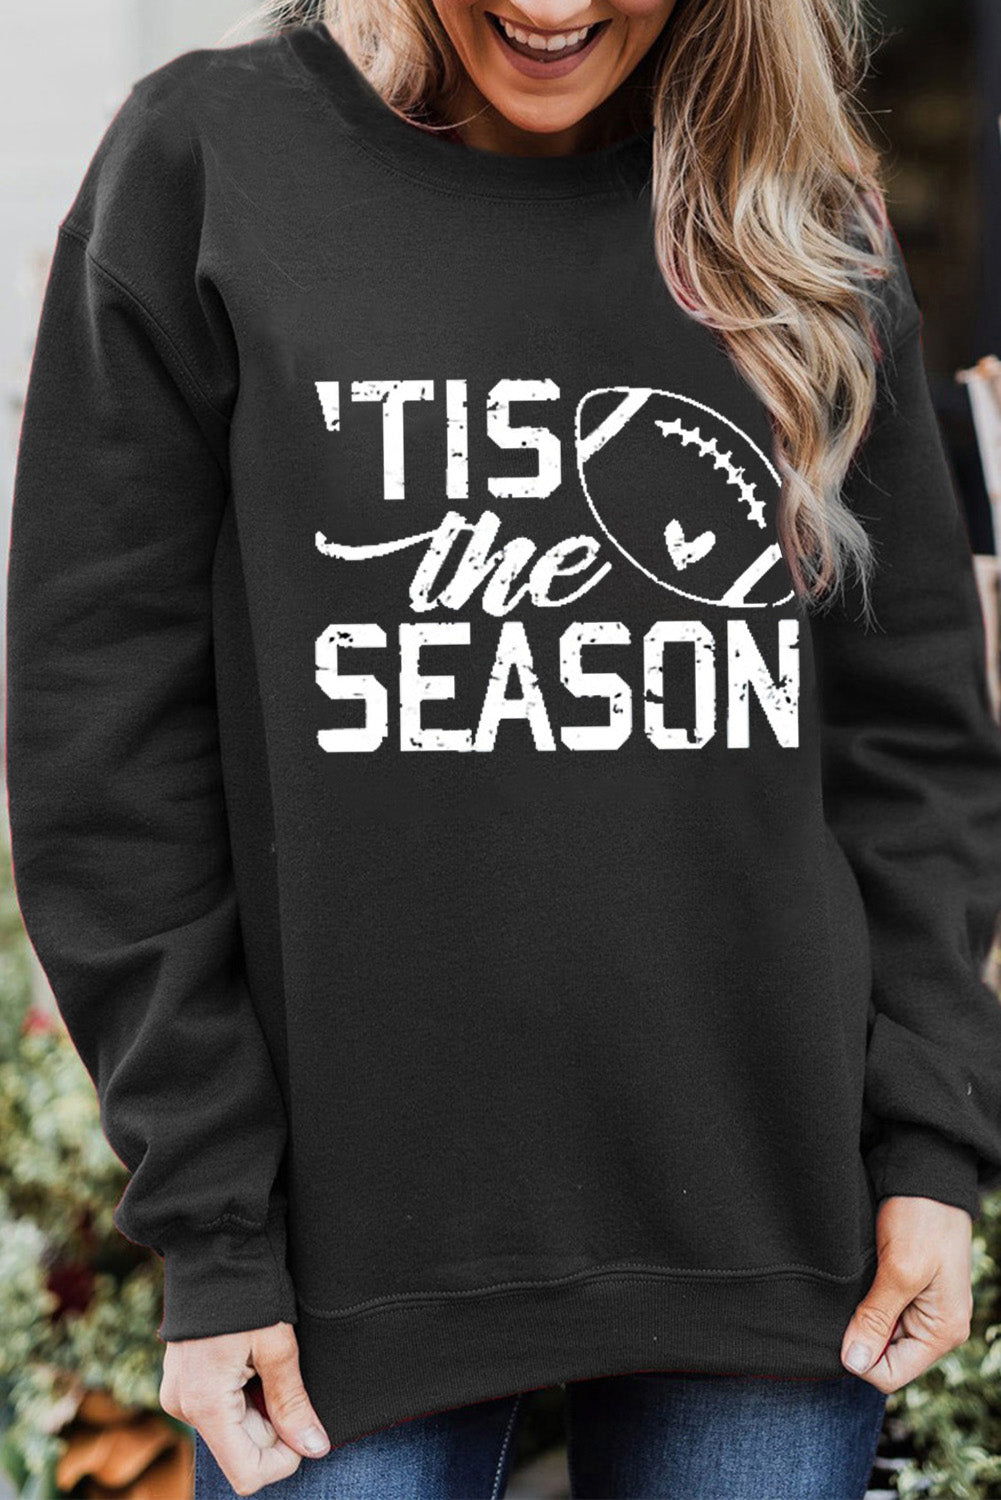 Tis the Season Football Graphic Sweatshirt - Cheeky Chic Boutique